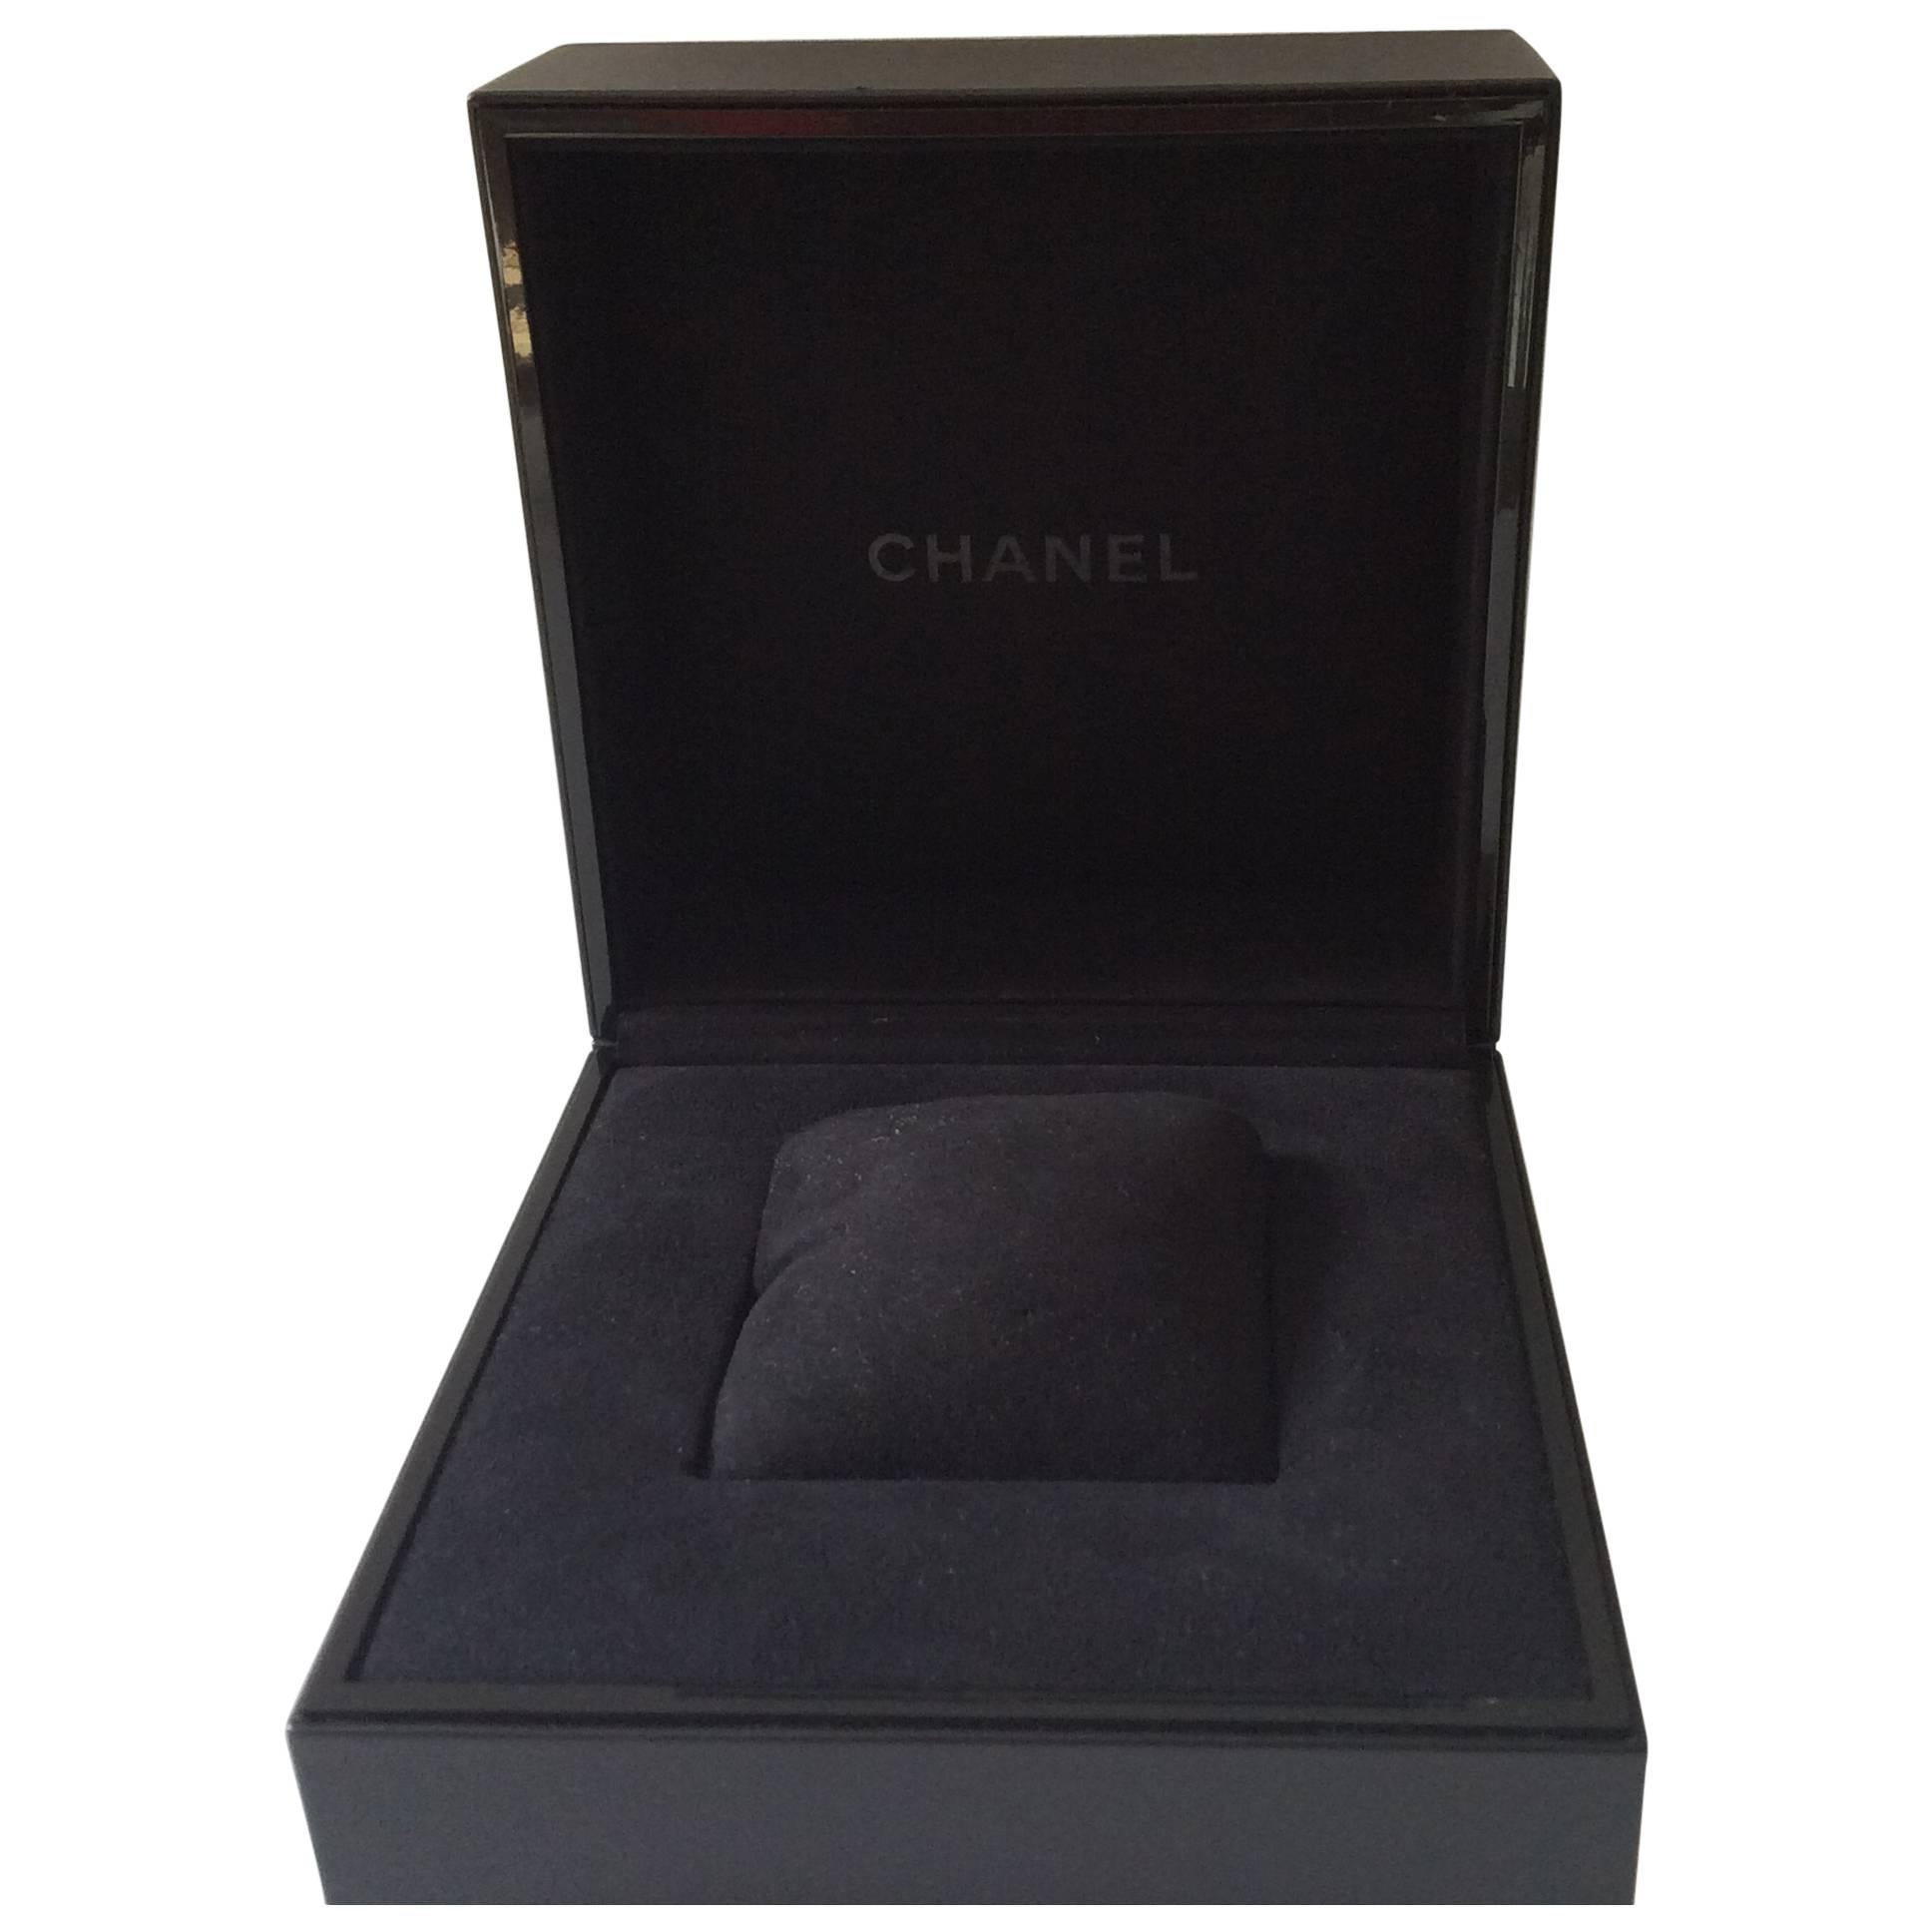 Chanel Fine Jewelry Box - Leather - Rare For Sale